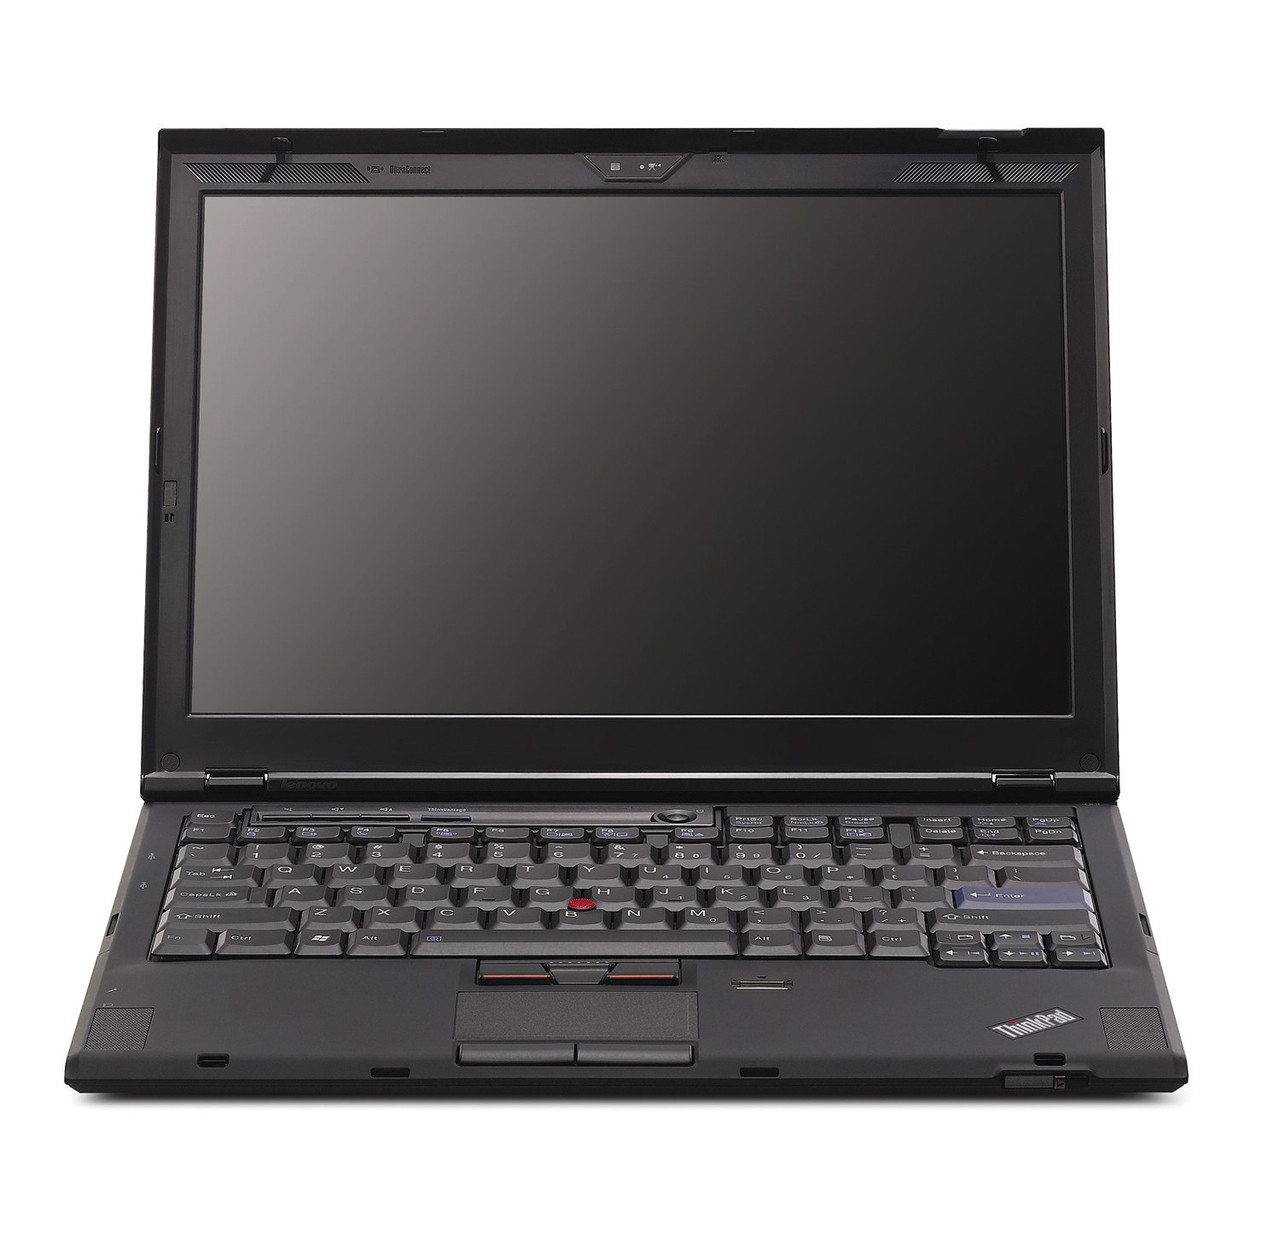 Refurbished Lenovo ThinkPad x301 Core laptop on SALE